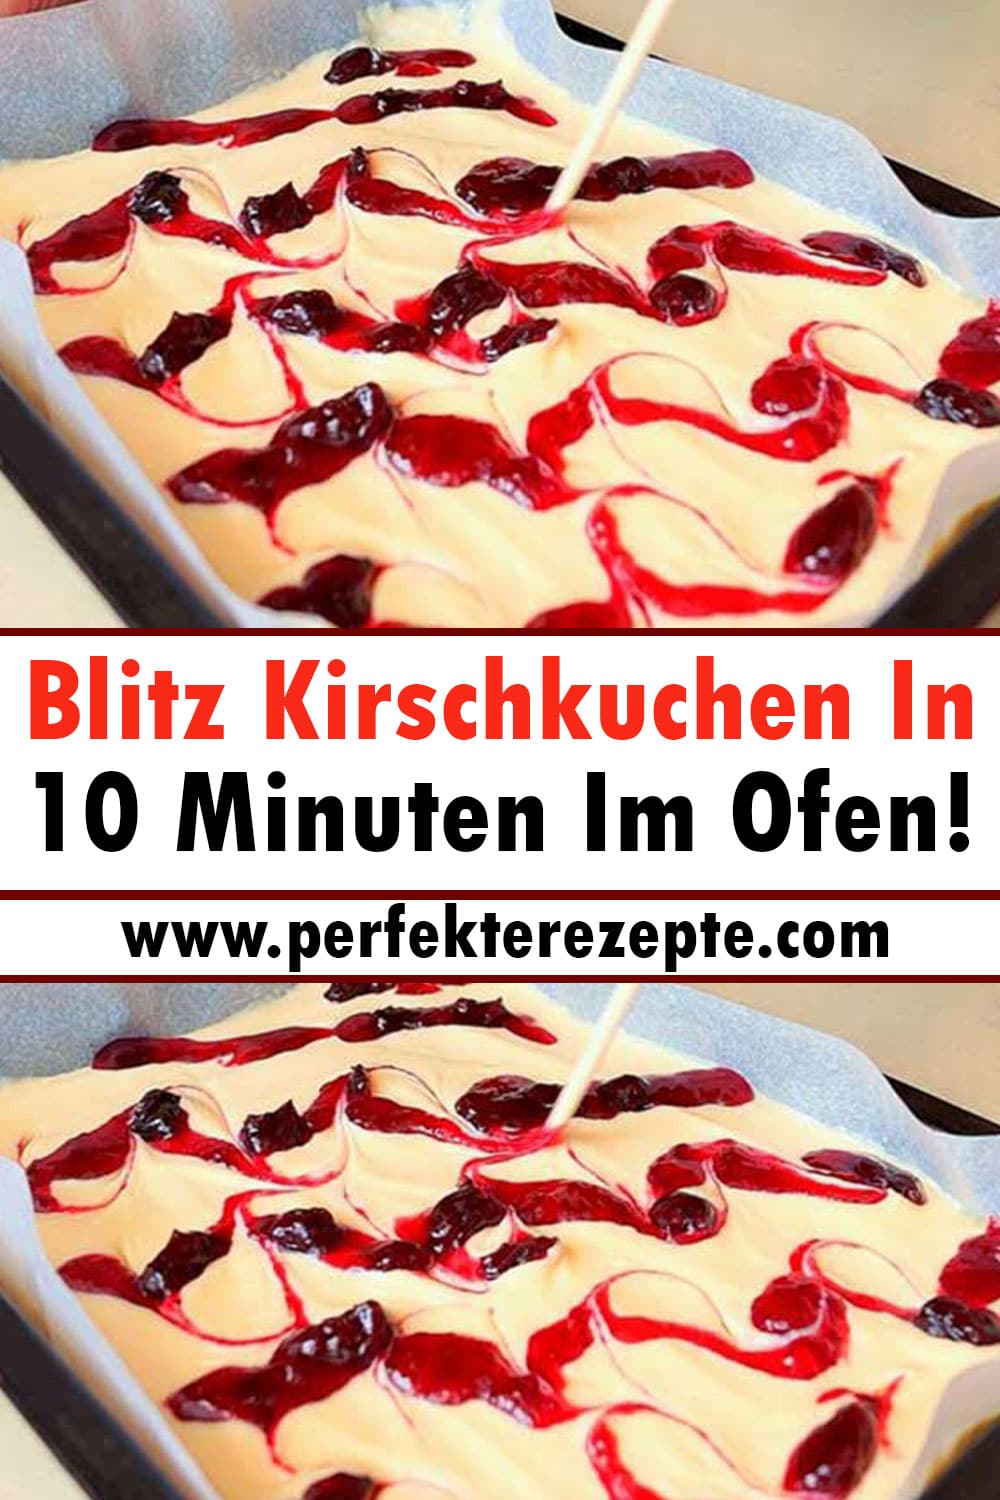 Blitz Kirschkuchen Rezept In 10 Minuten Im Ofen!